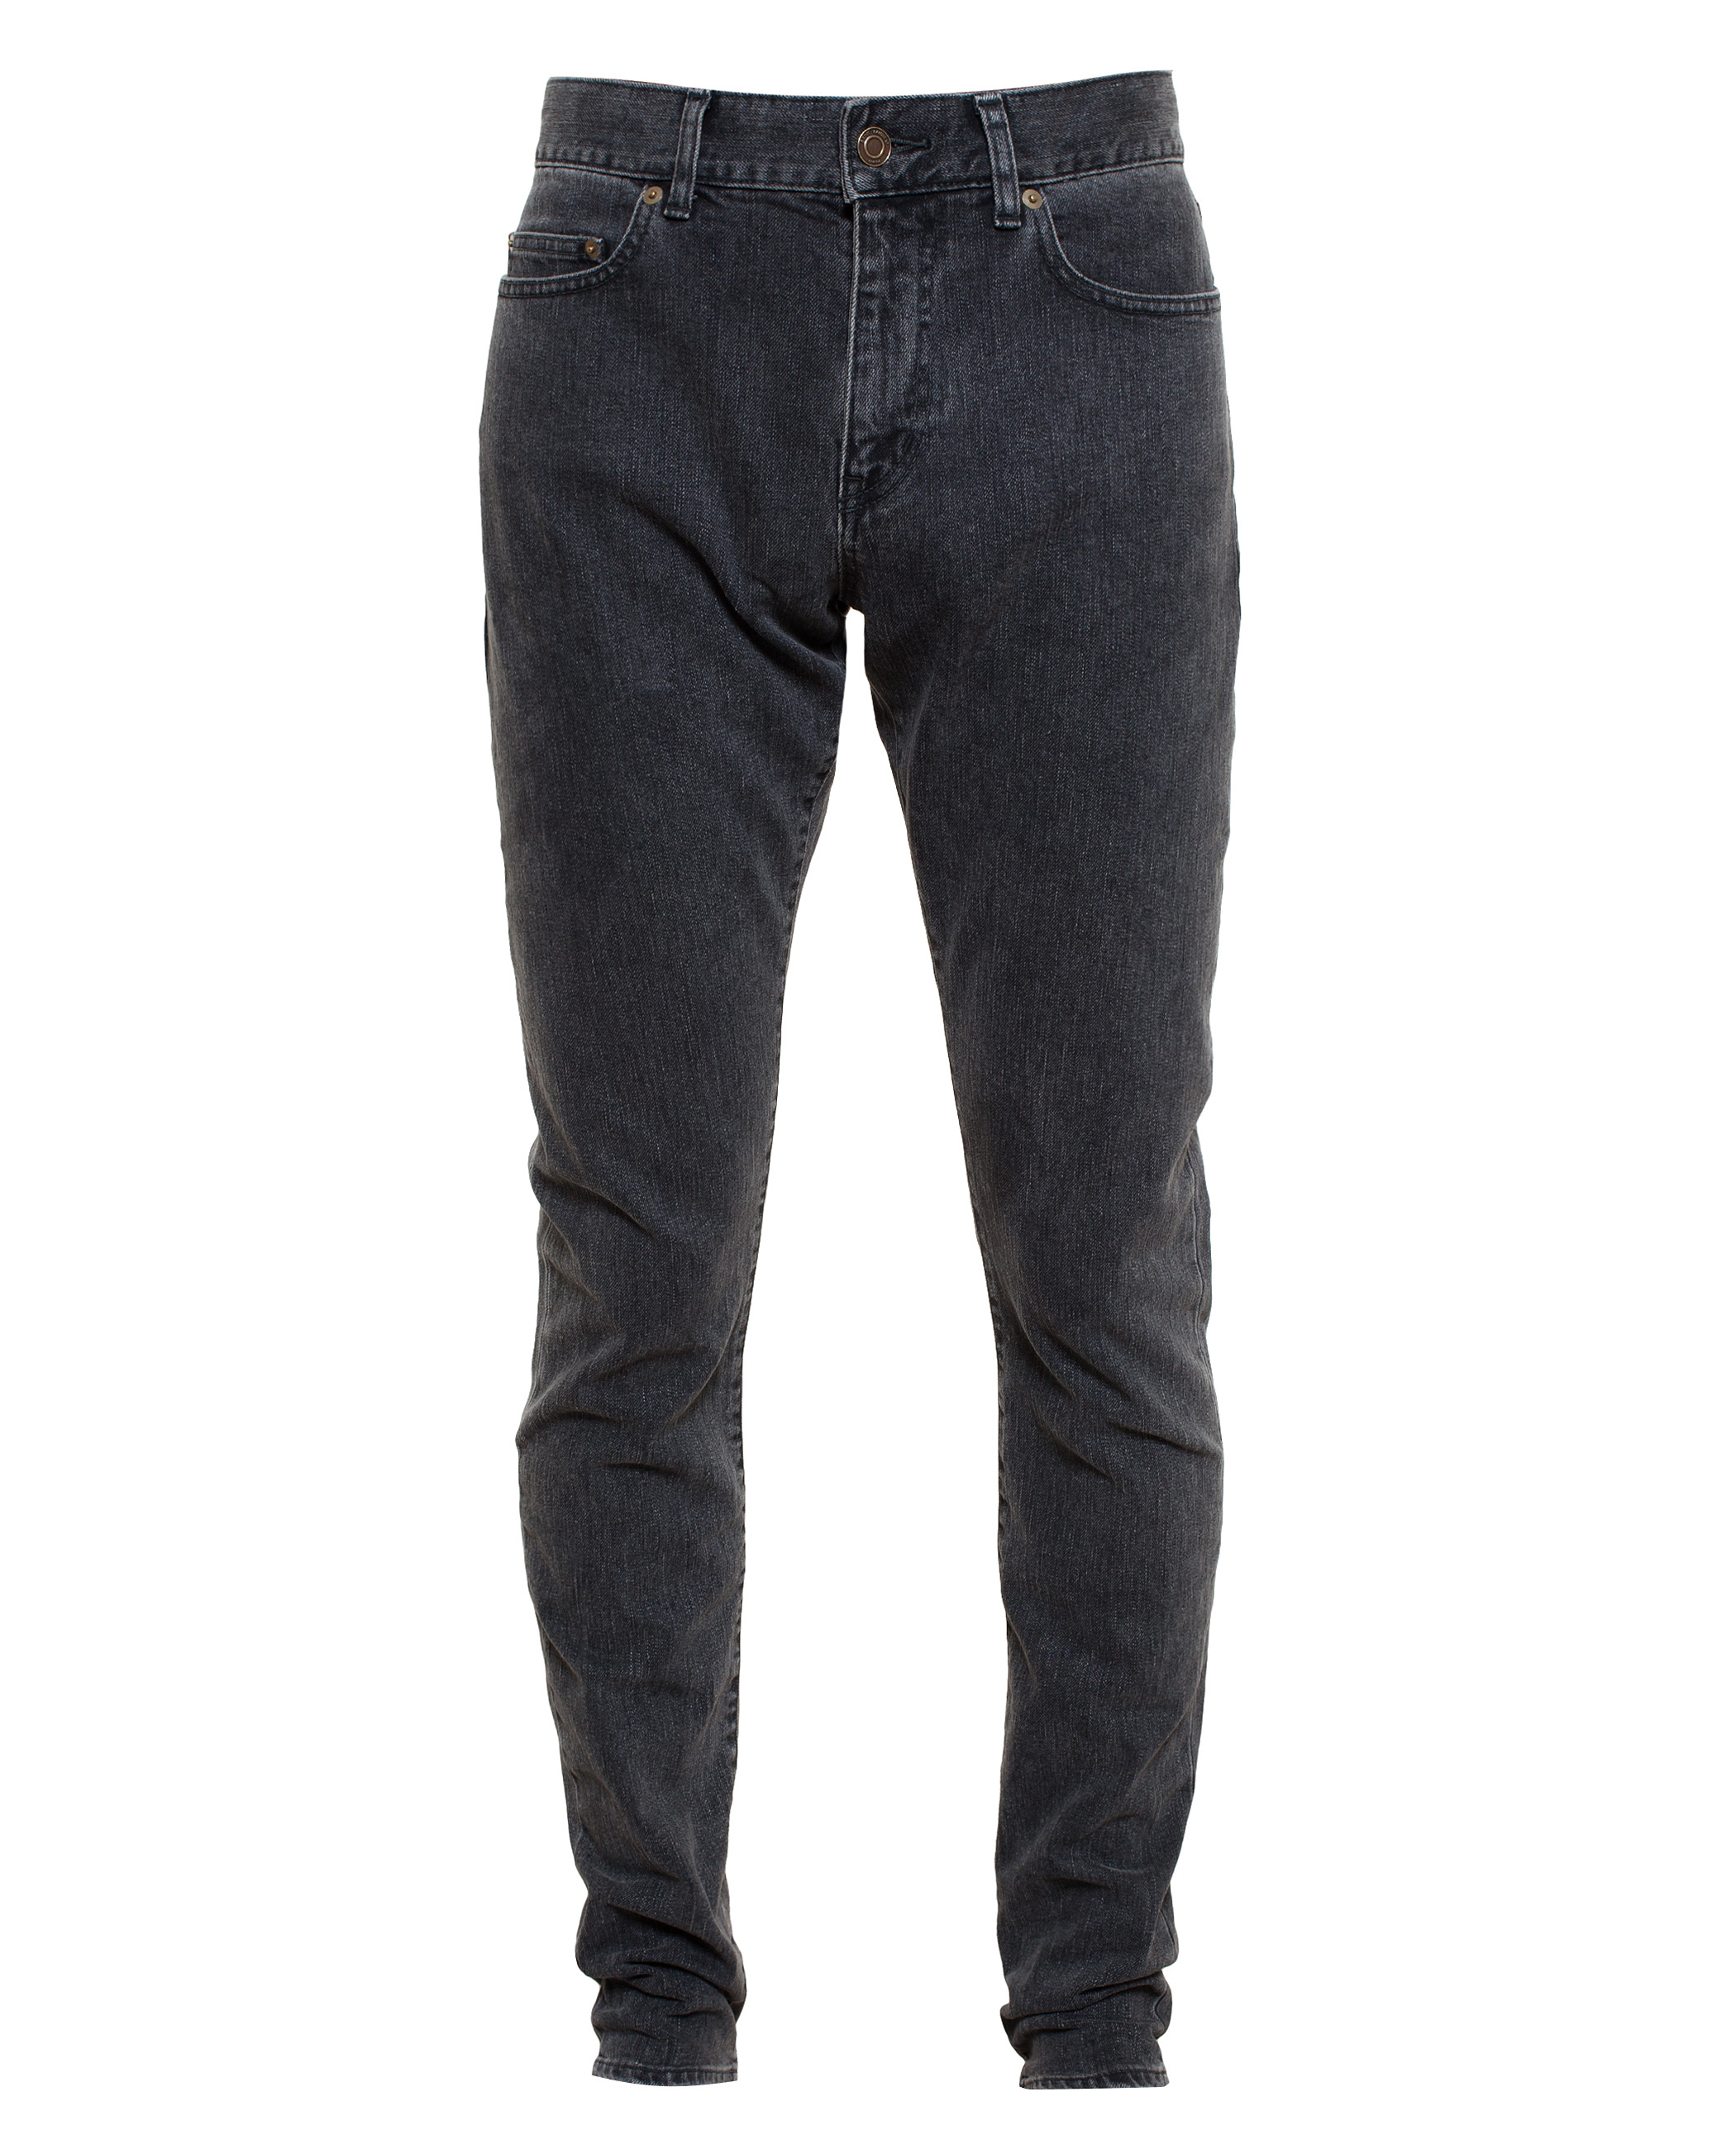 Lyst - Saint Laurent Stonewashed Slim Jeans in Black for Men